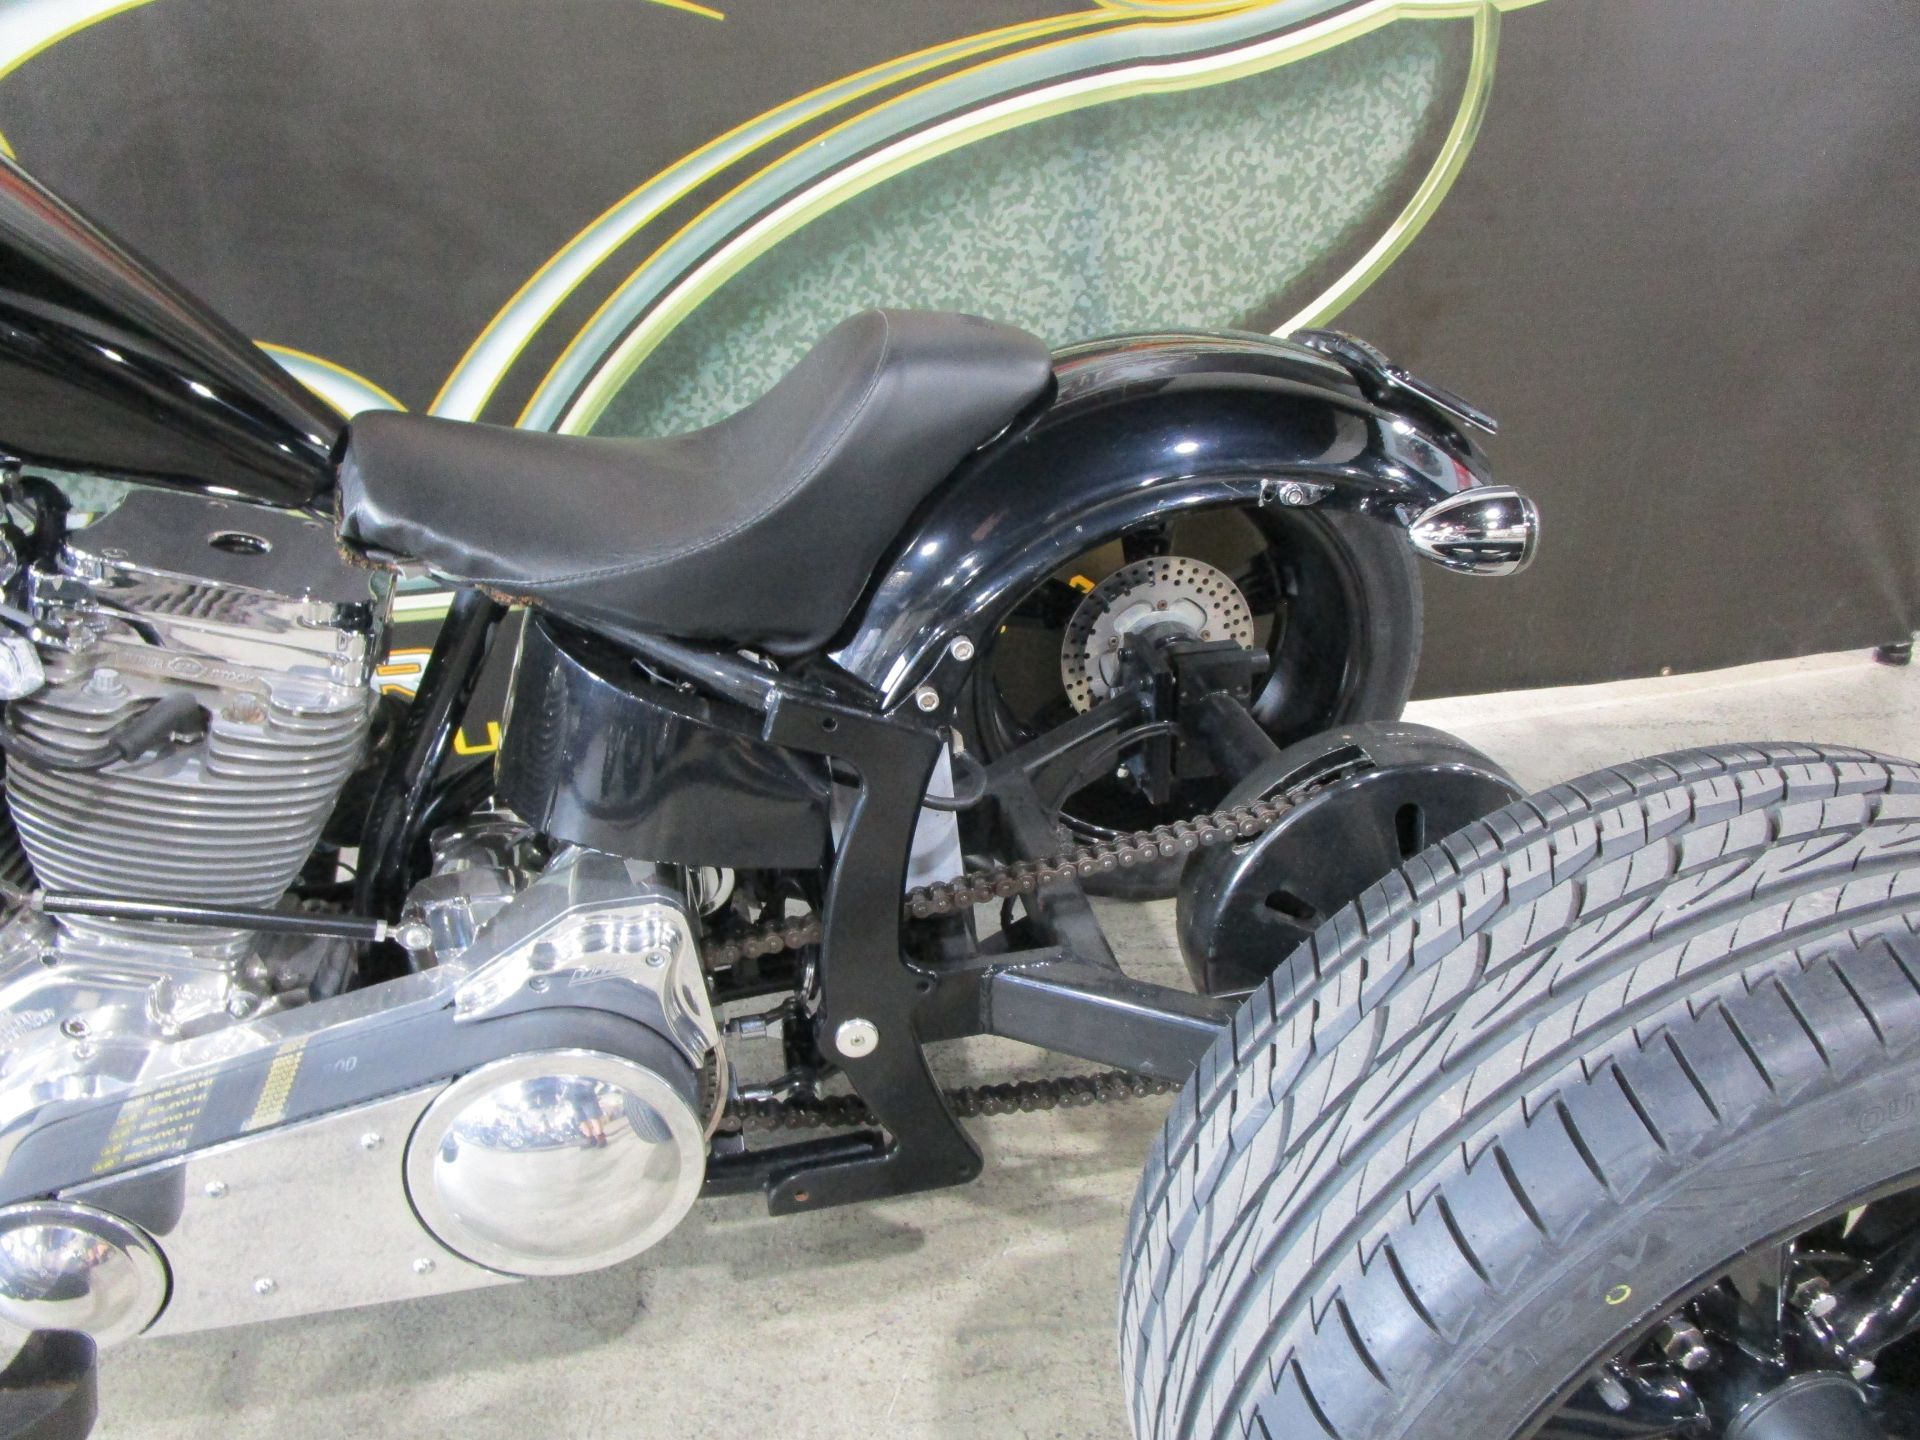 2012 Big Dog Motorcycles Chopper Trike in South Saint Paul, Minnesota - Photo 15